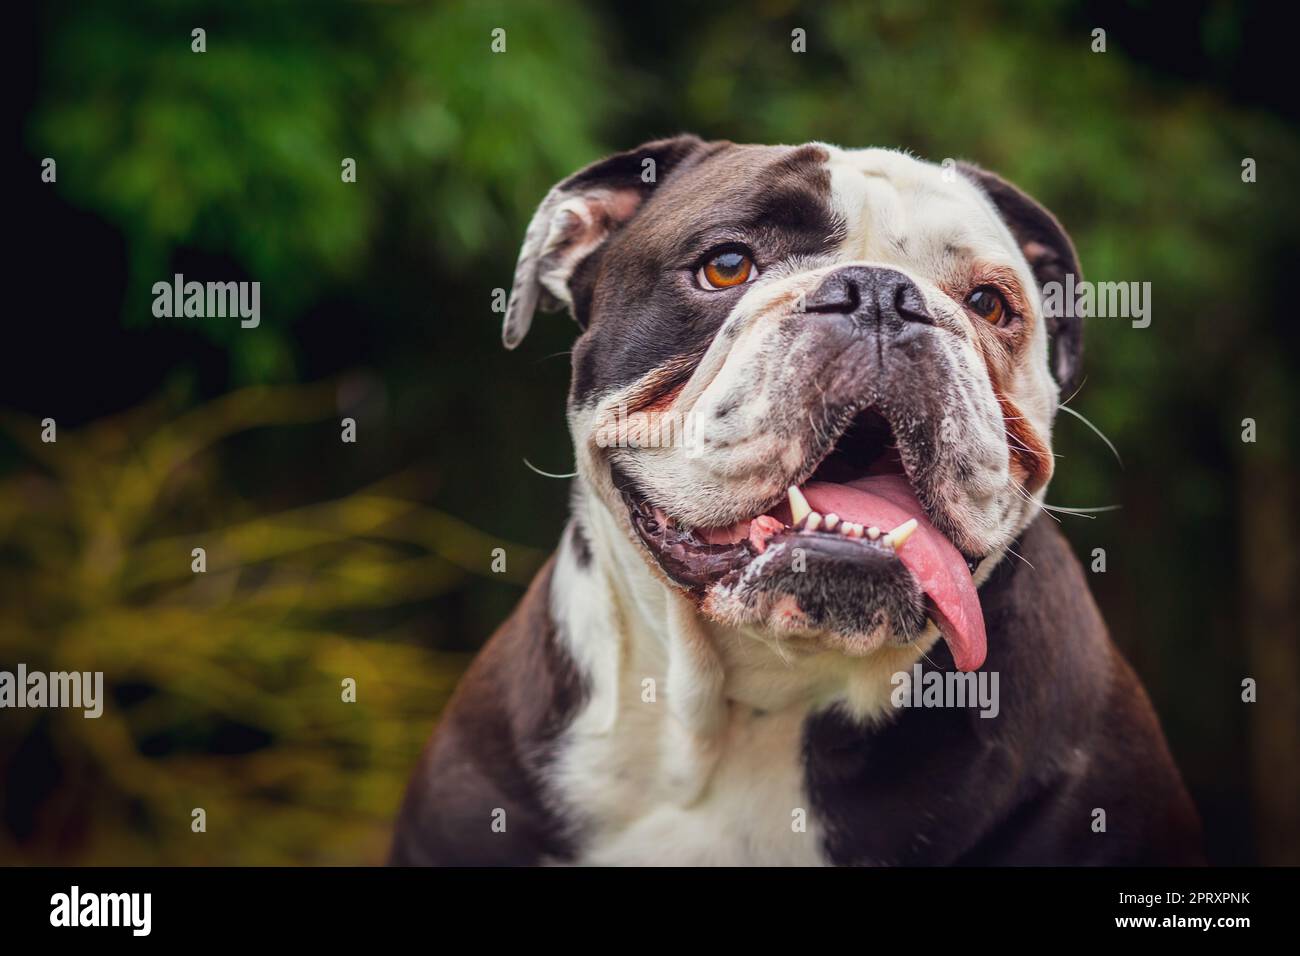 An adorable Olde English Bulldogge in nature Stock Photo